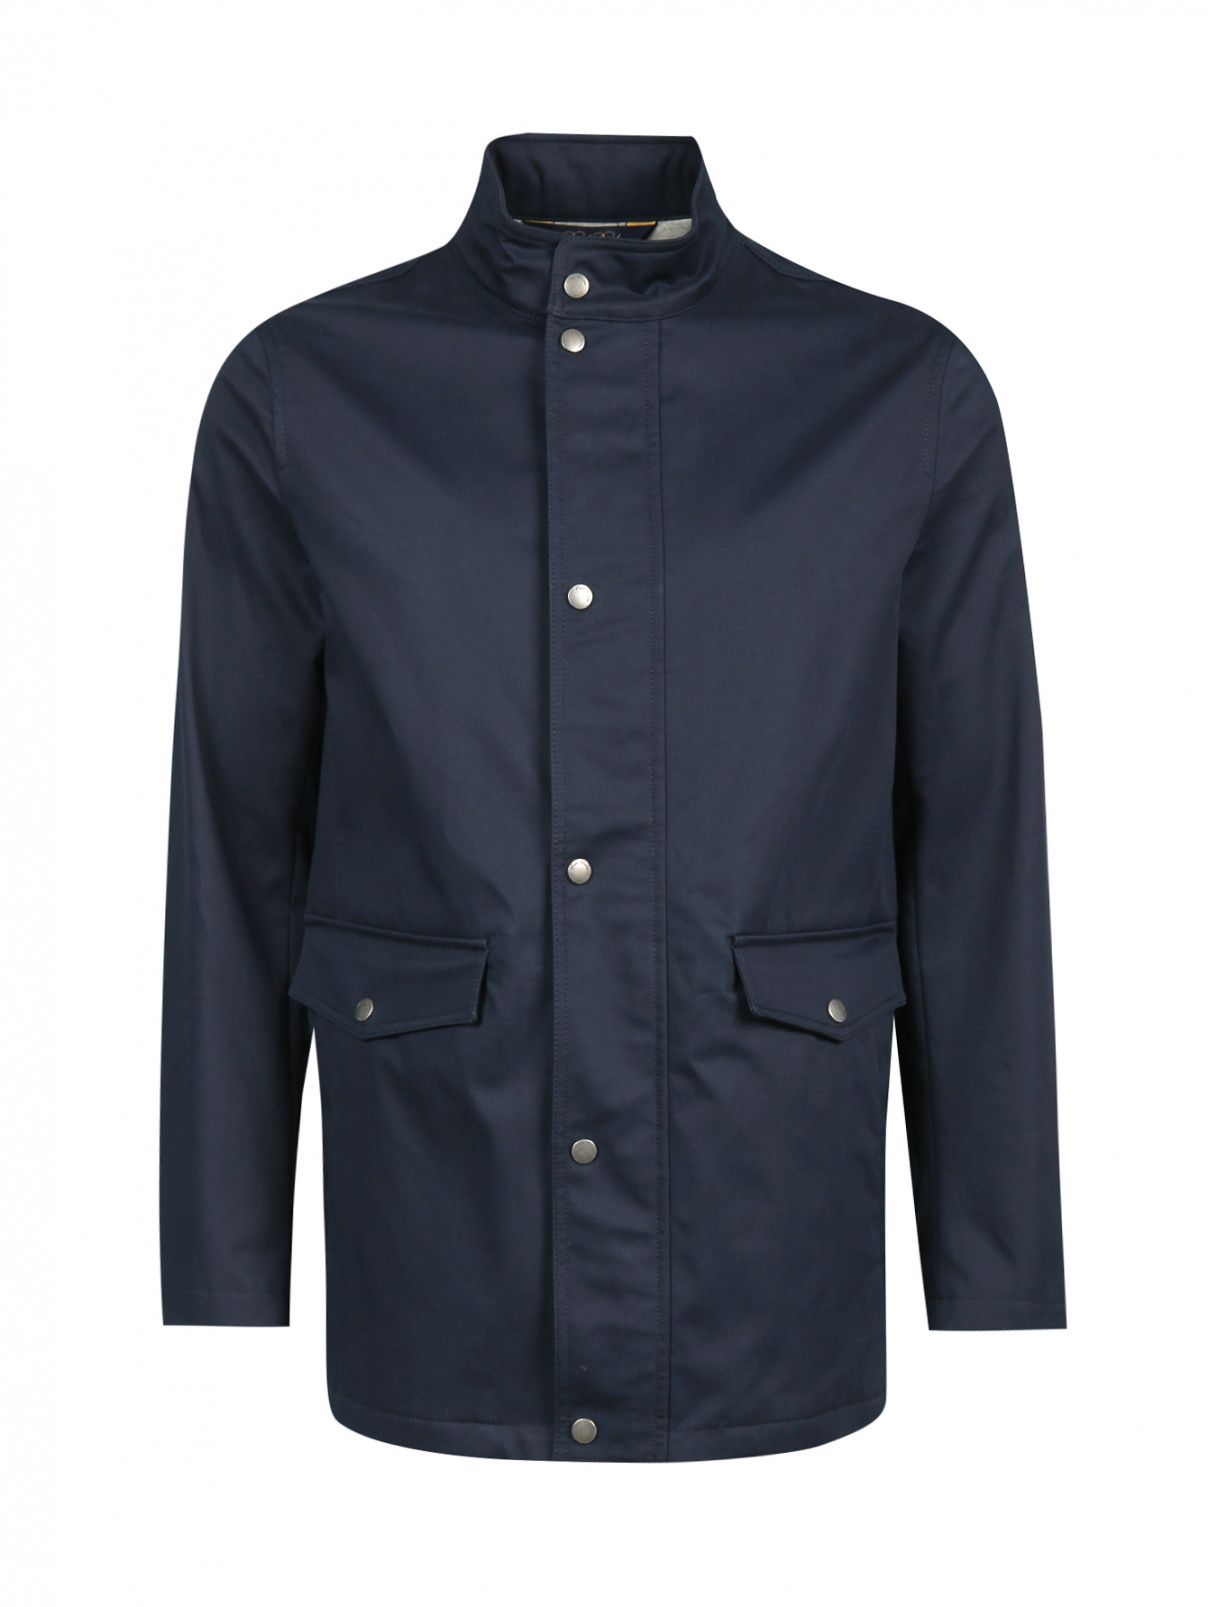 Куртка на молнии с накладными карманами Brooks Brothers  –  Общий вид  – Цвет:  Синий